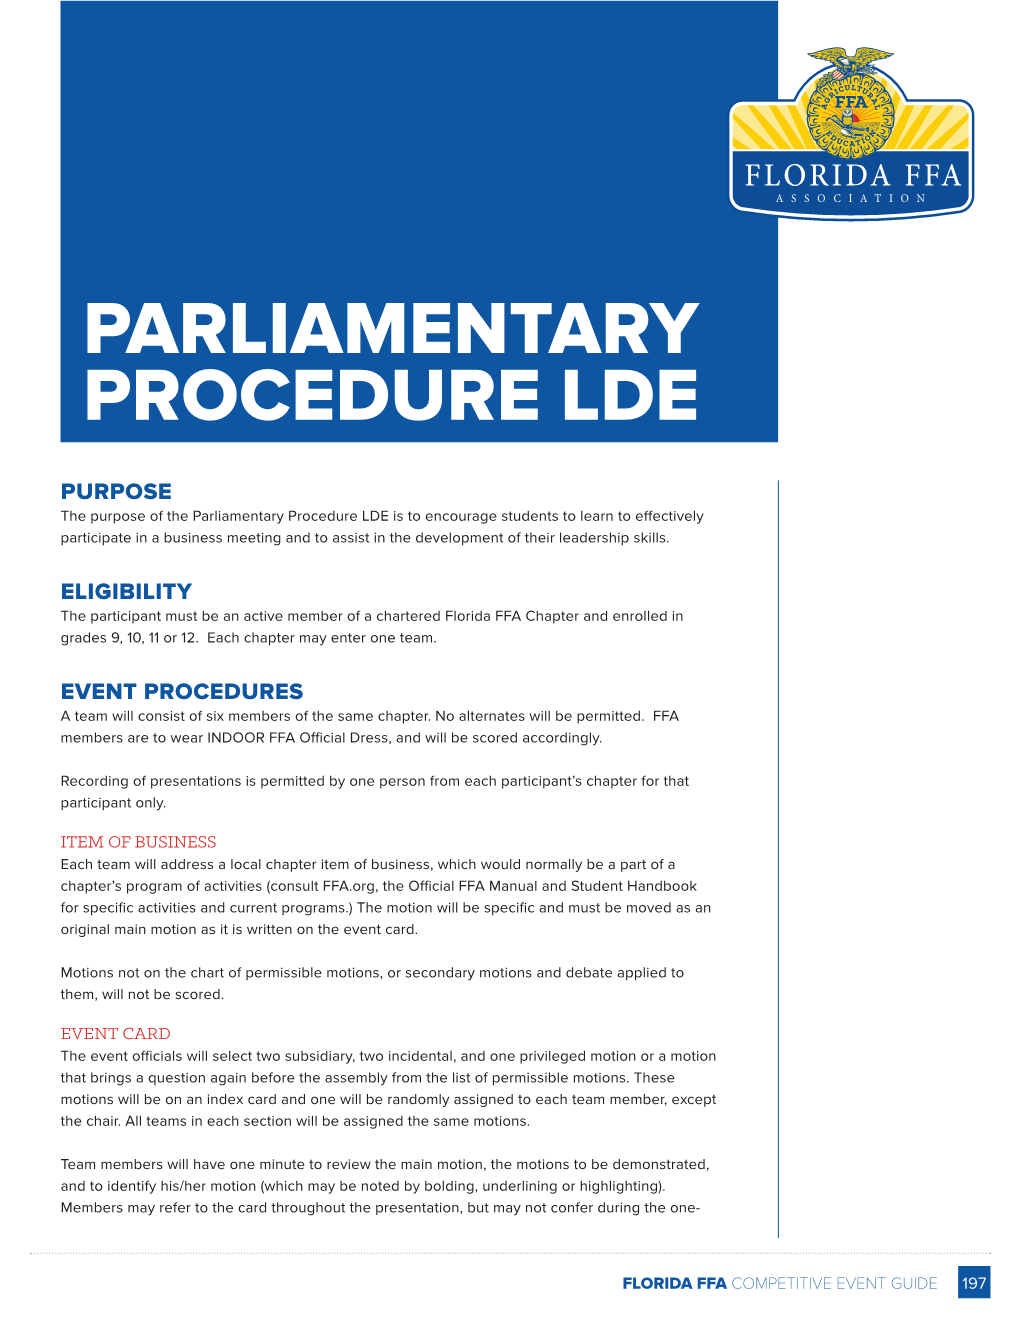 Parliamentary Procedure Lde